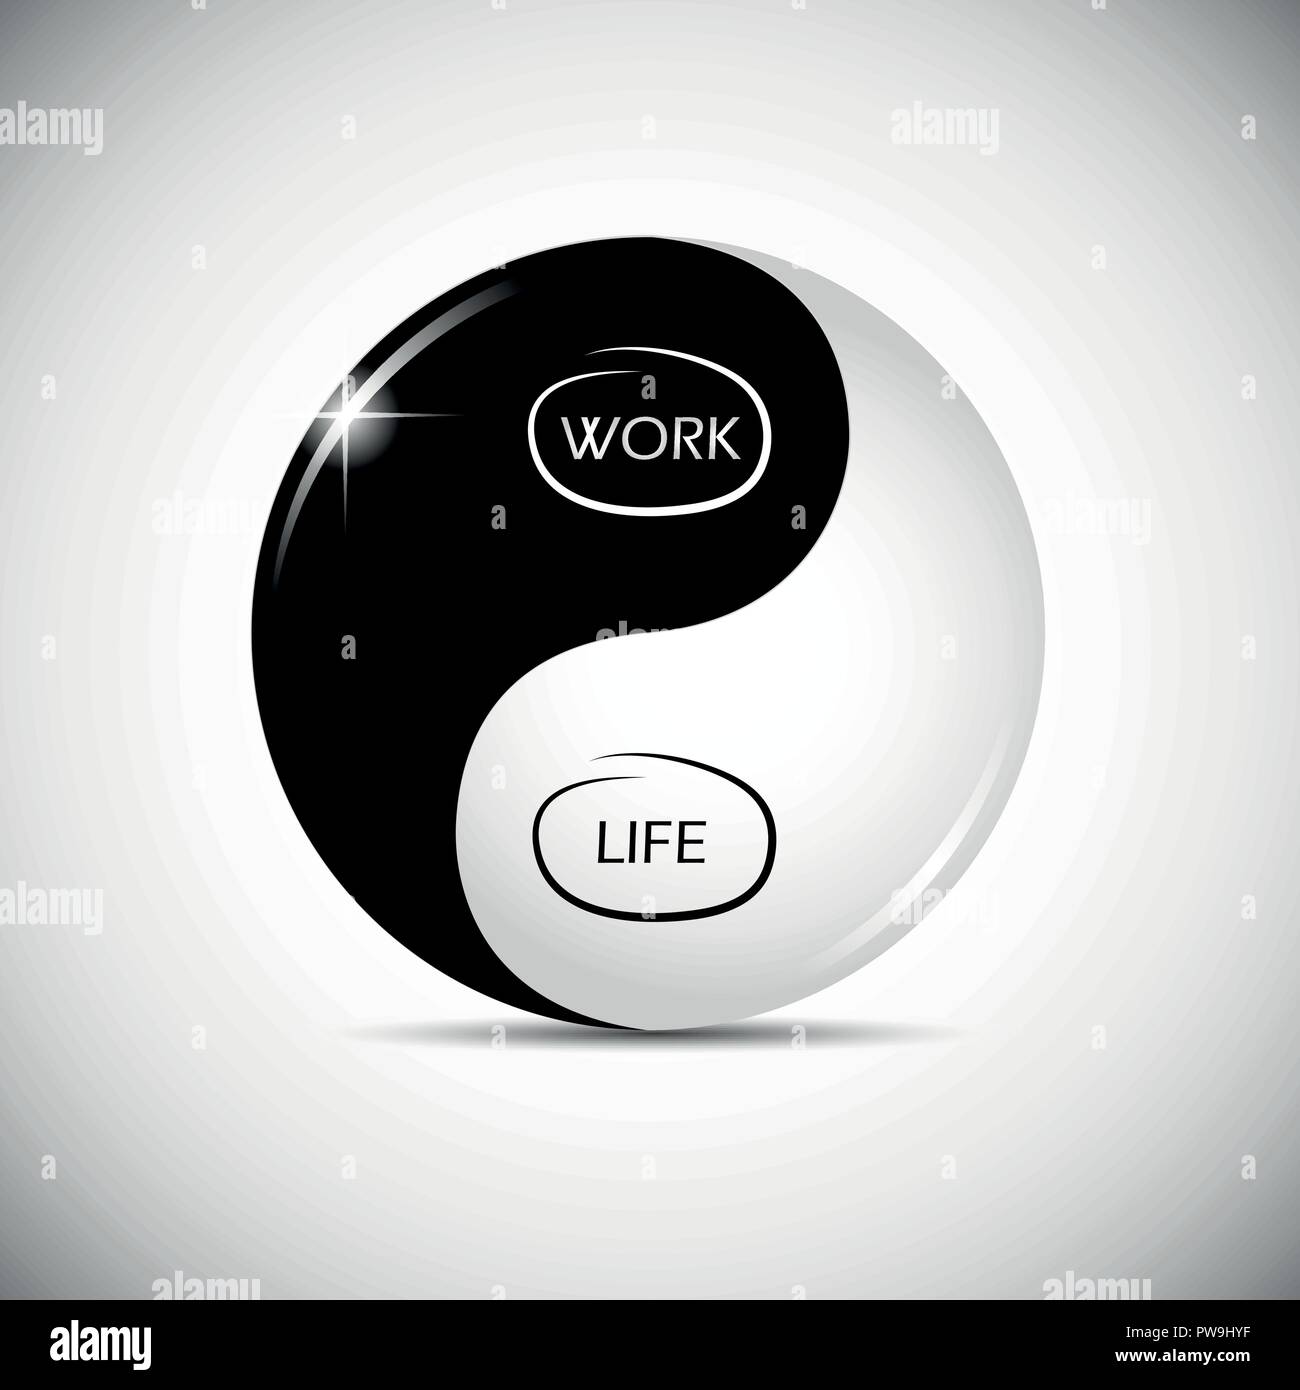 Yin and yang balance between work and life vector illustration EPS10 Stock Vector